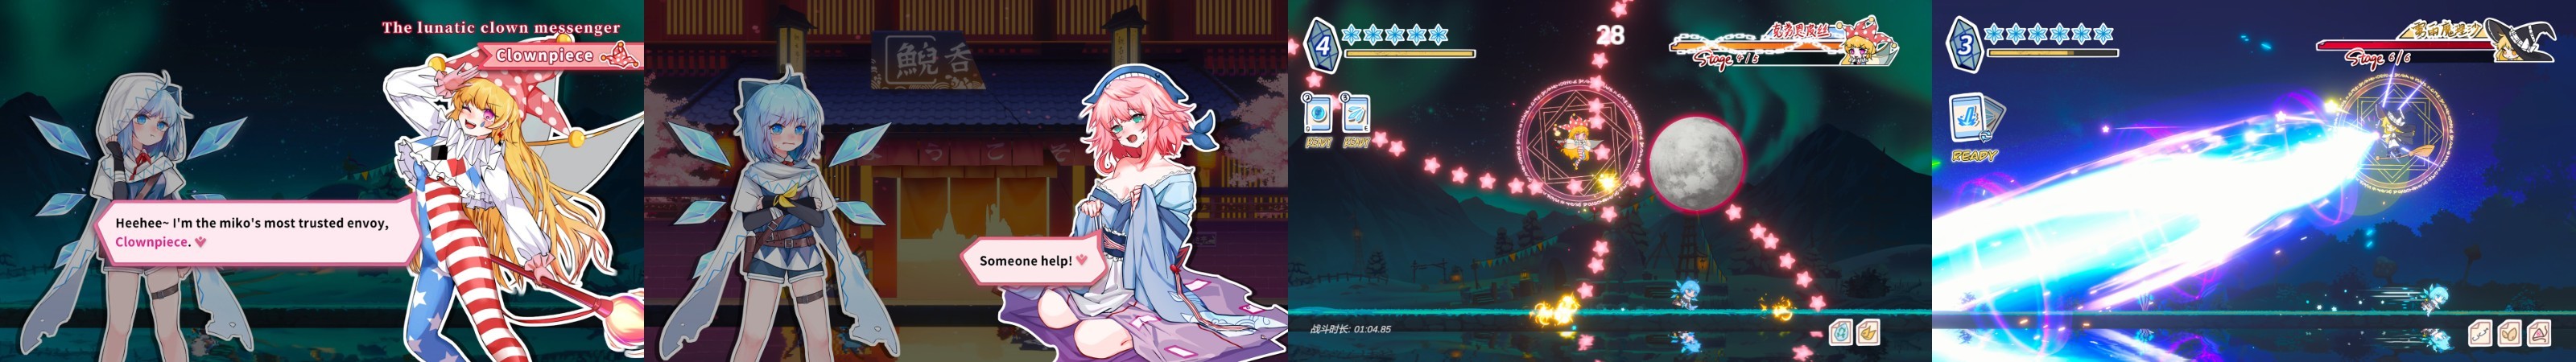 [PC] Touhou Hero of Ice Fairy v20240405-P2P | Anime-Sharing Community